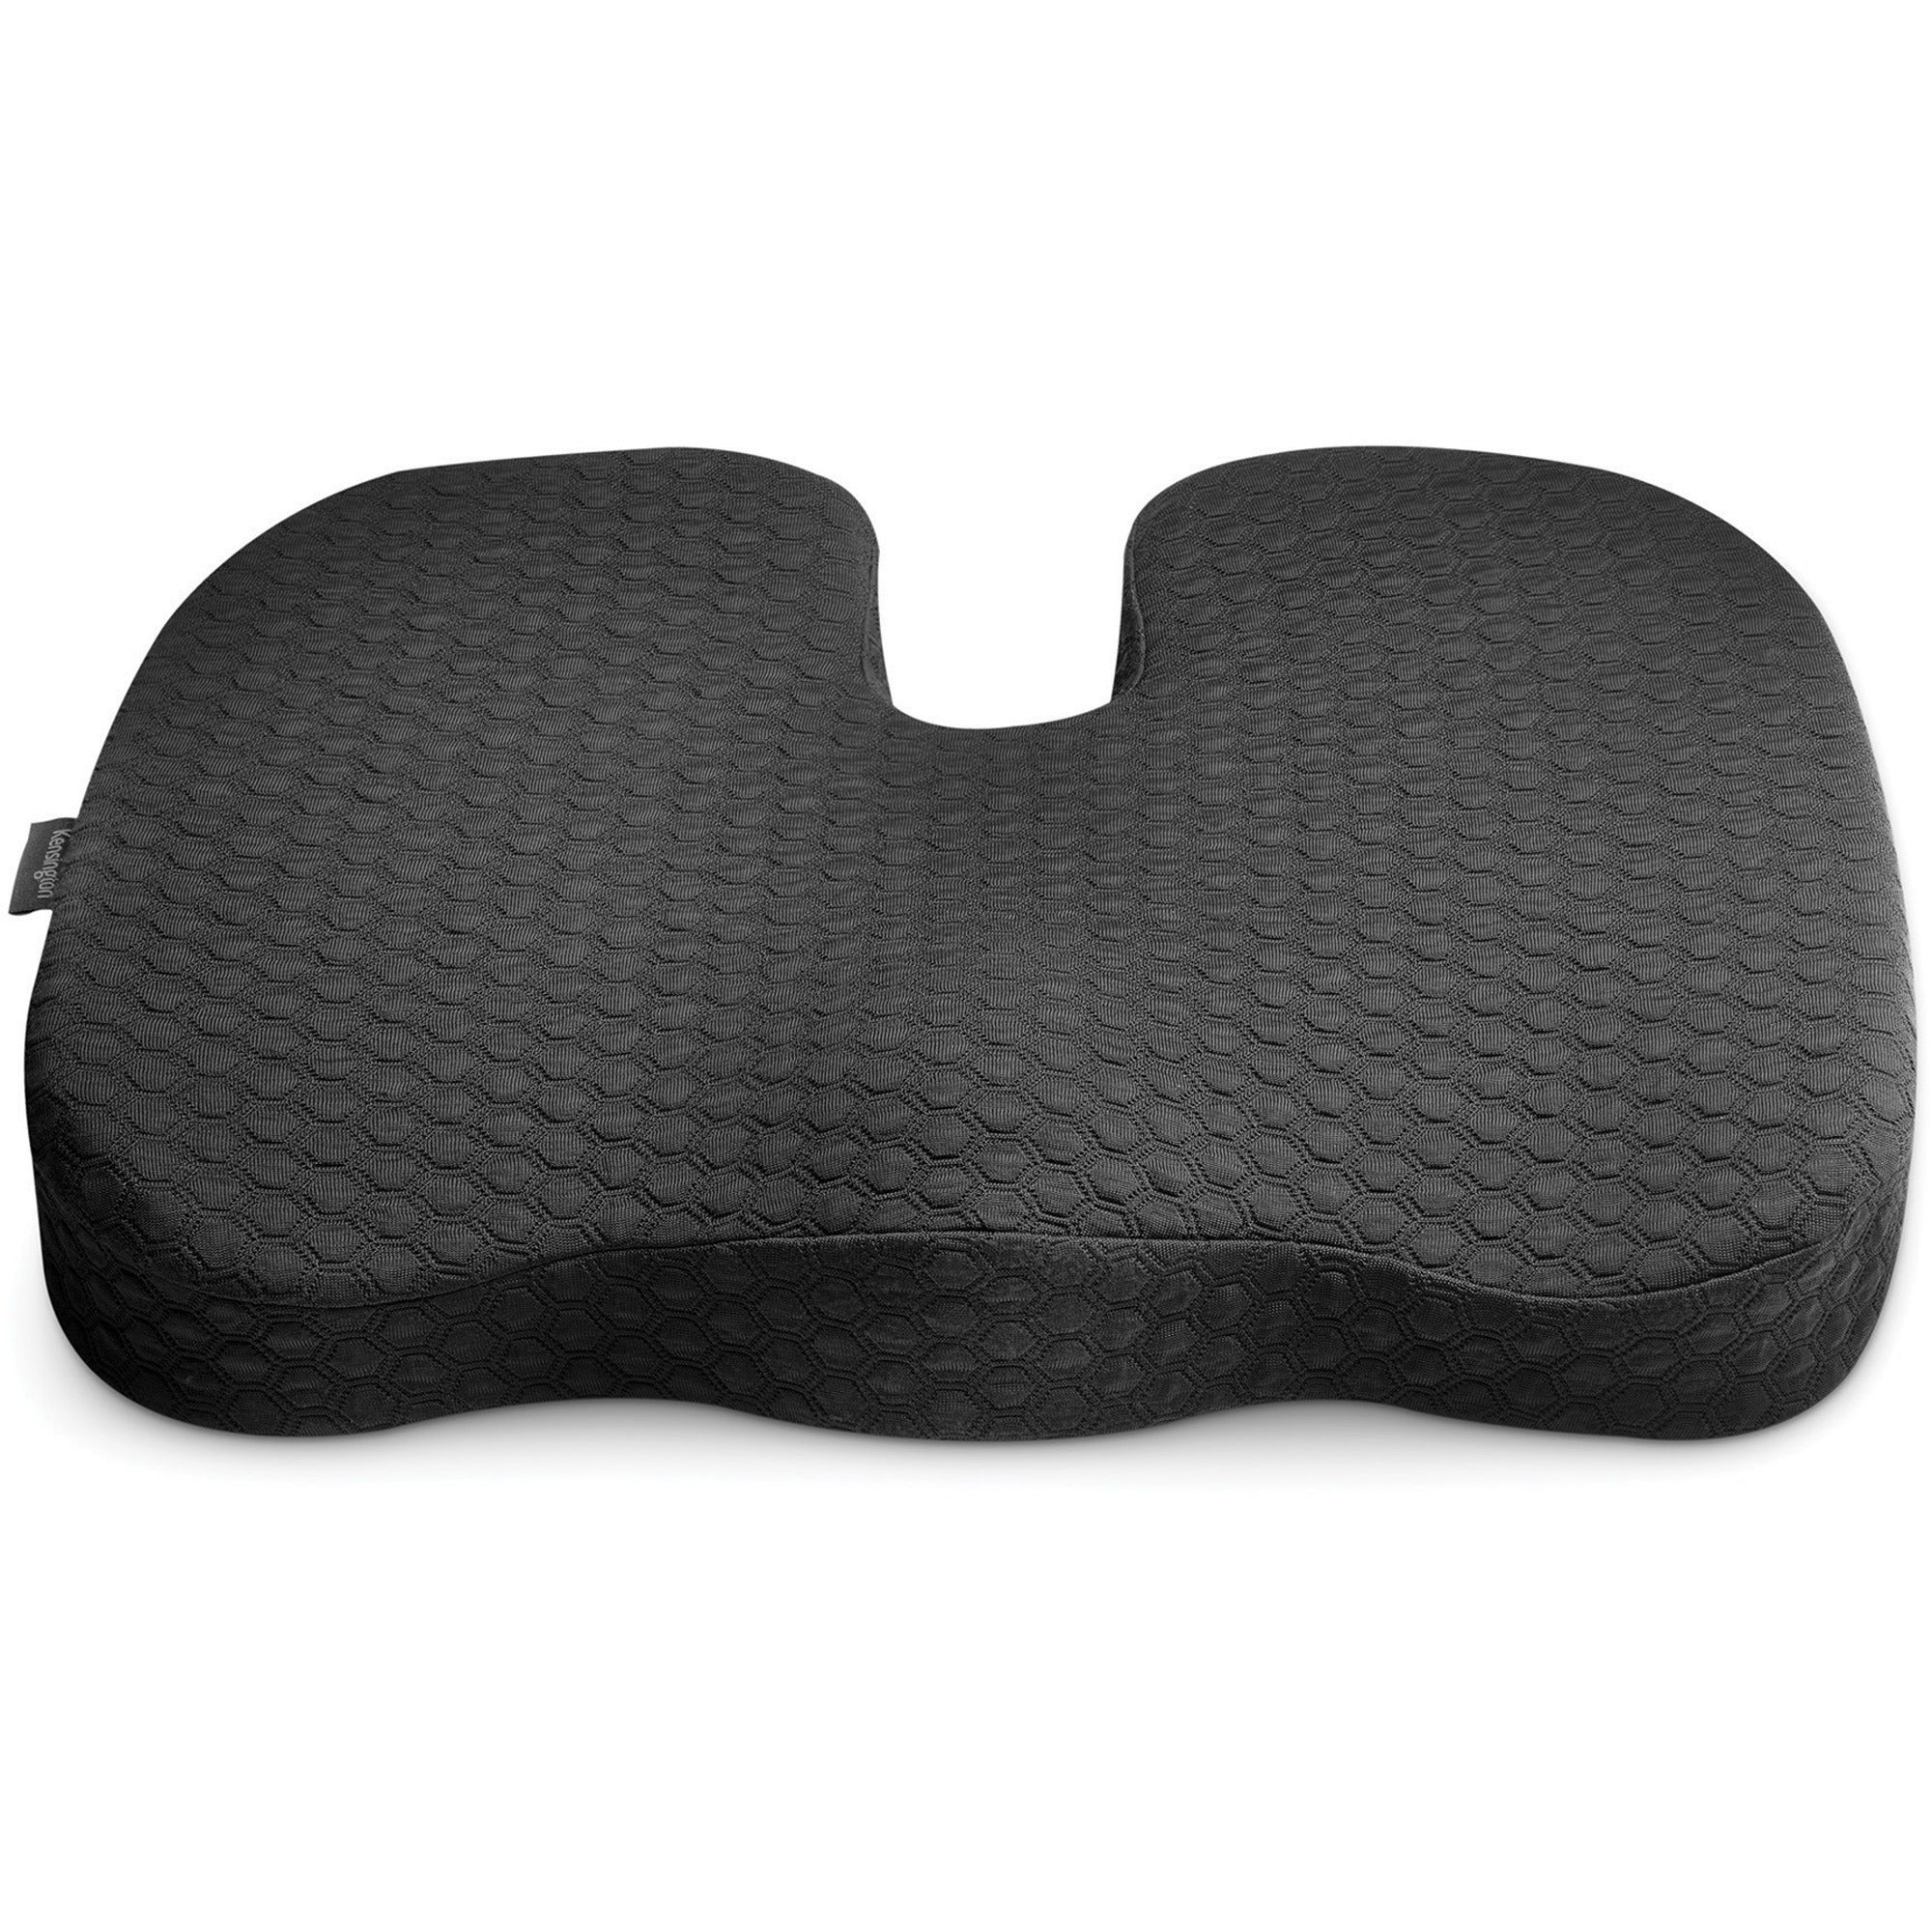 kensington-premium-cool-gel-seat-cushion-14-x-18-gel-filling-fabric-cover-foam-comfortable-durable-anti-slip-ergonomic-design-machine-washable-carrying-strap-black-1each_kmw55807 - 2